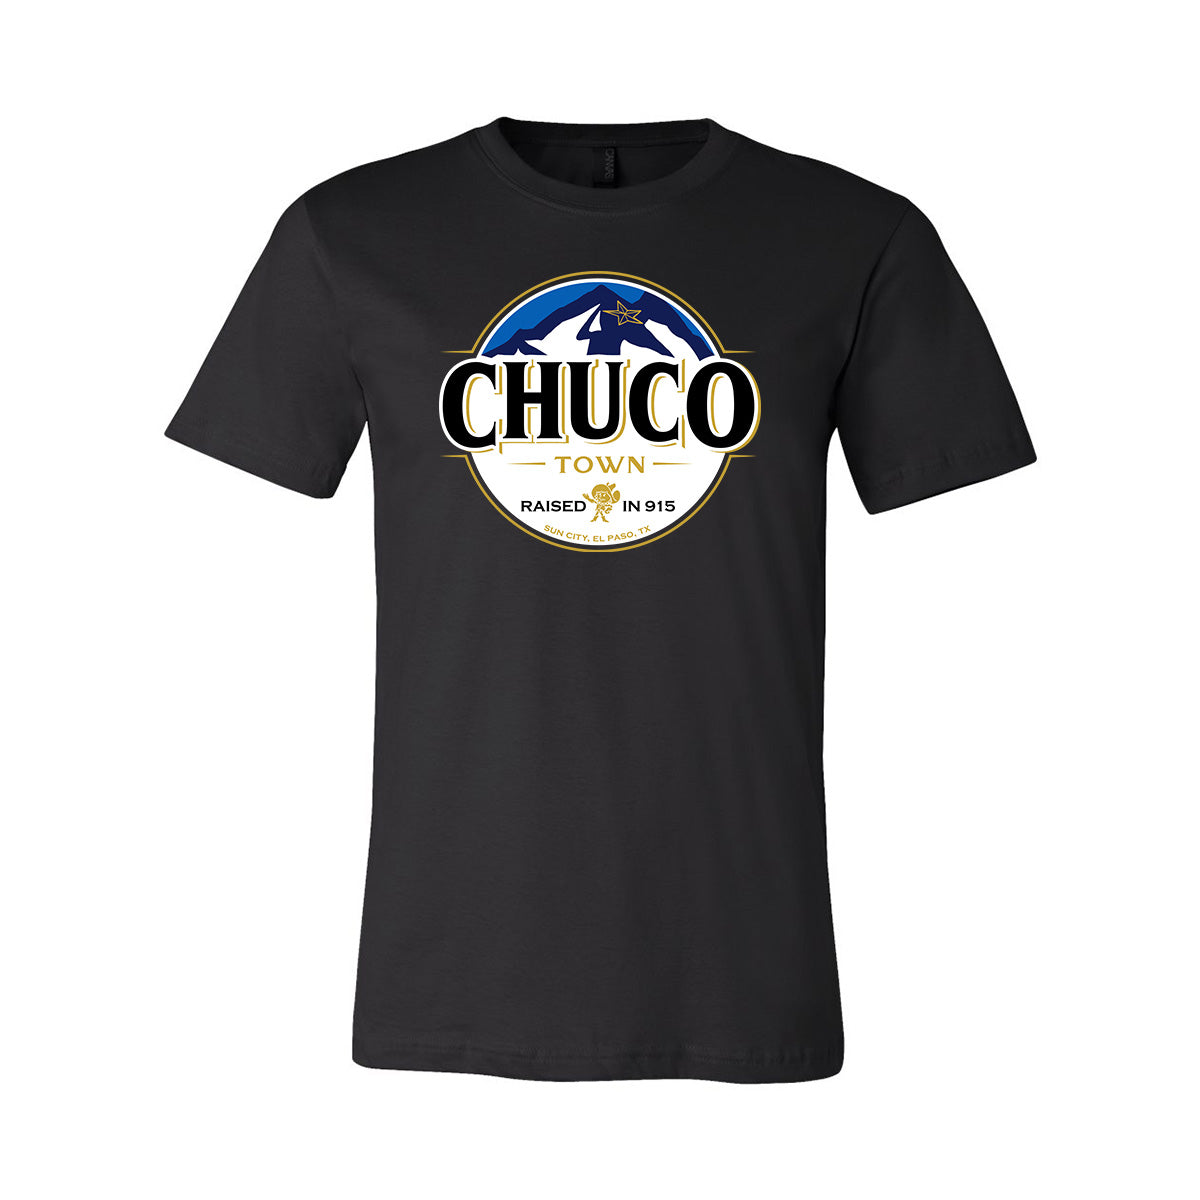 "Busch inspired Chuco" T-shirt (Black) by Sweet Jesus Radio